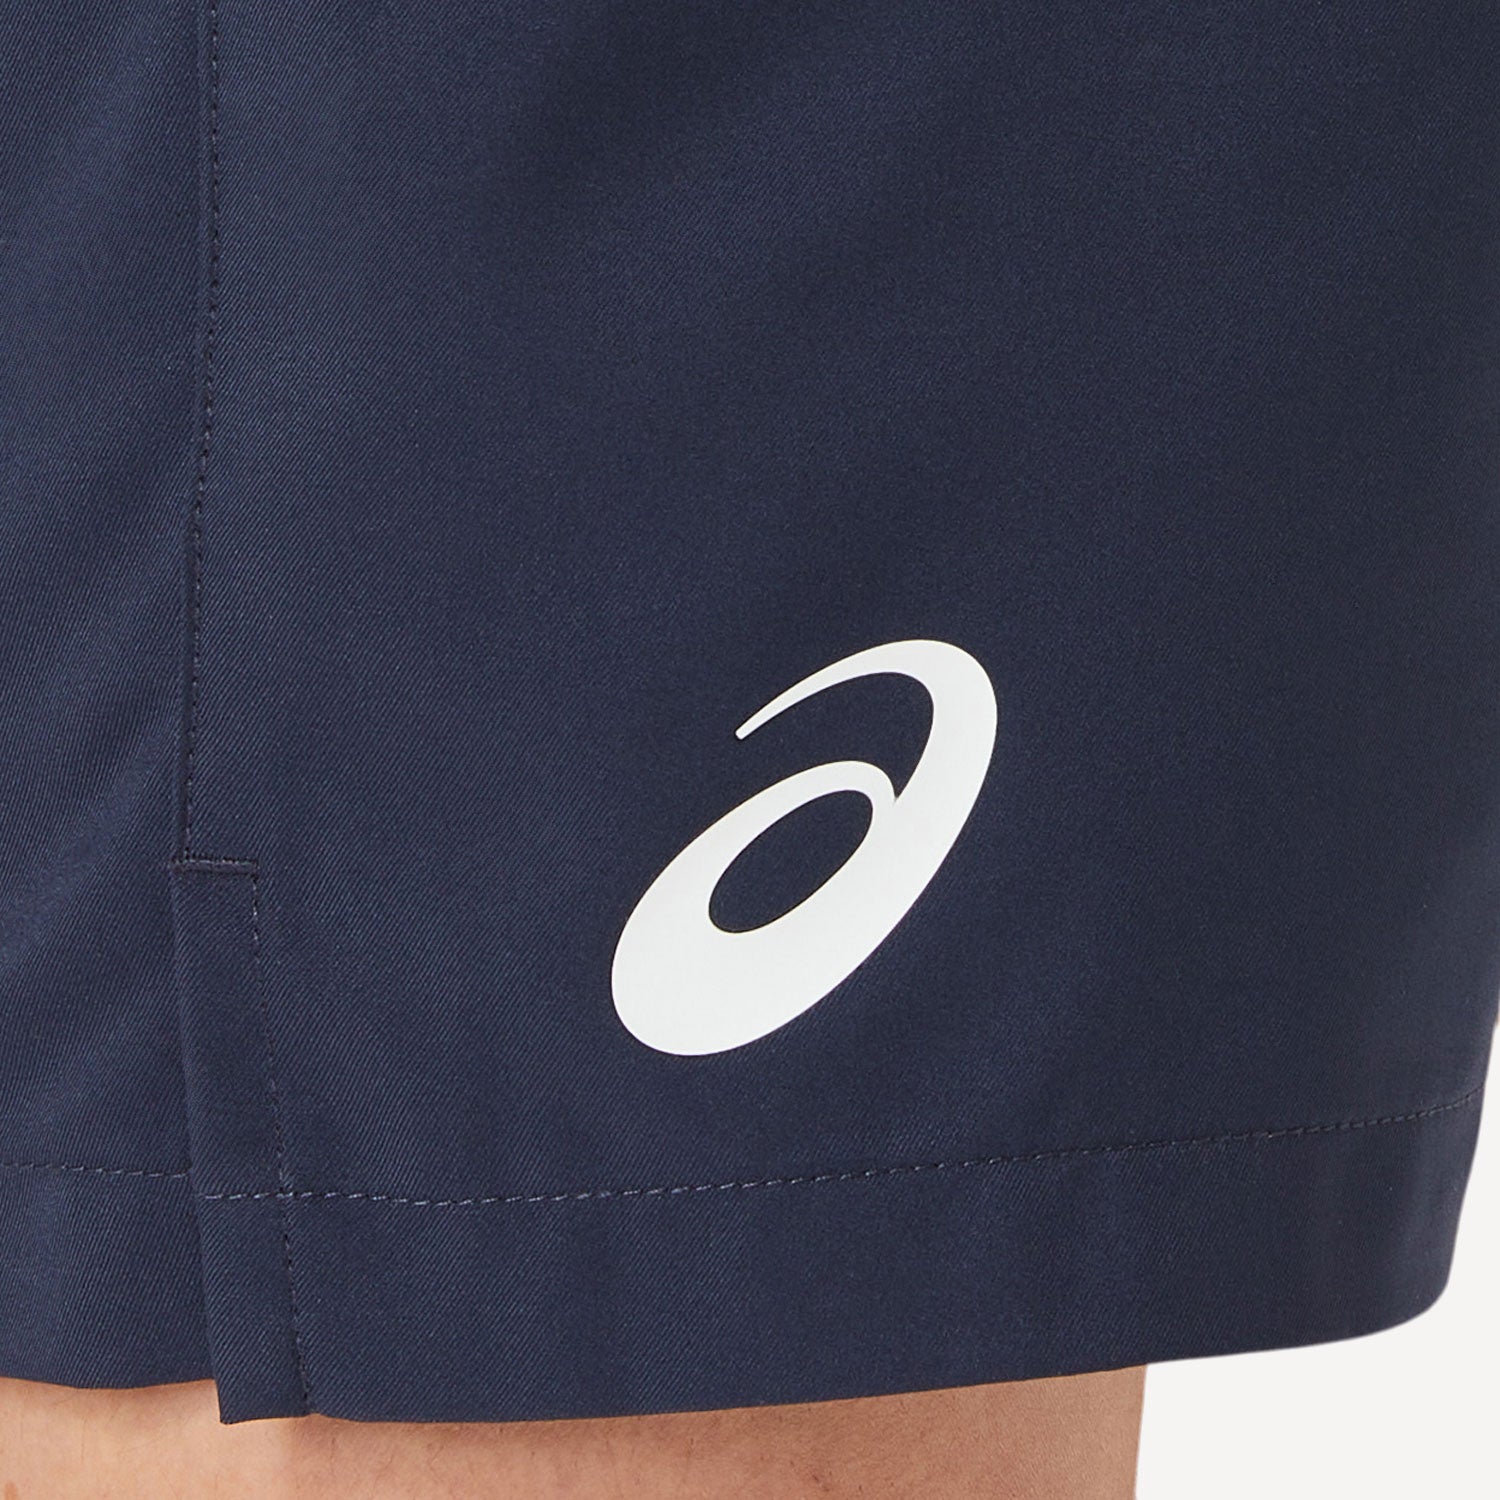 ASICS Boys' Tennis Shorts Blue (5)